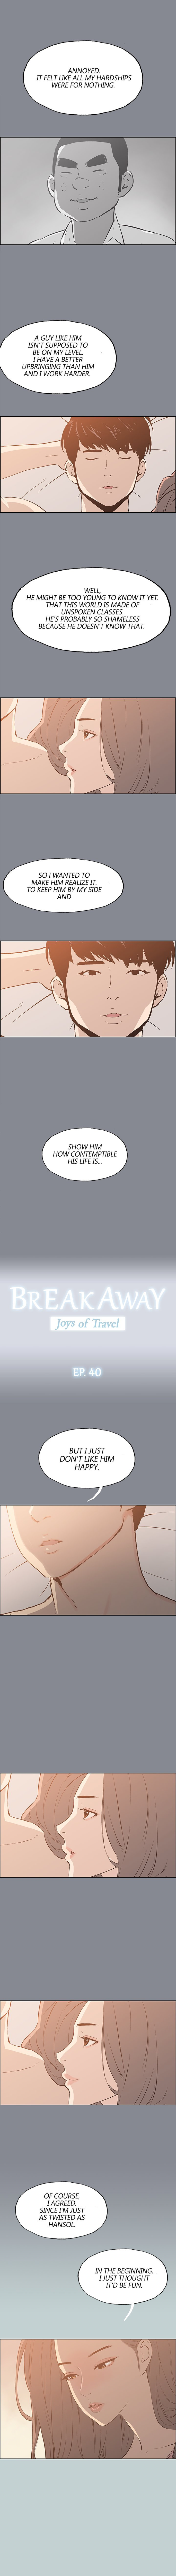 breakaway-joys-of-travel-chap-40-0